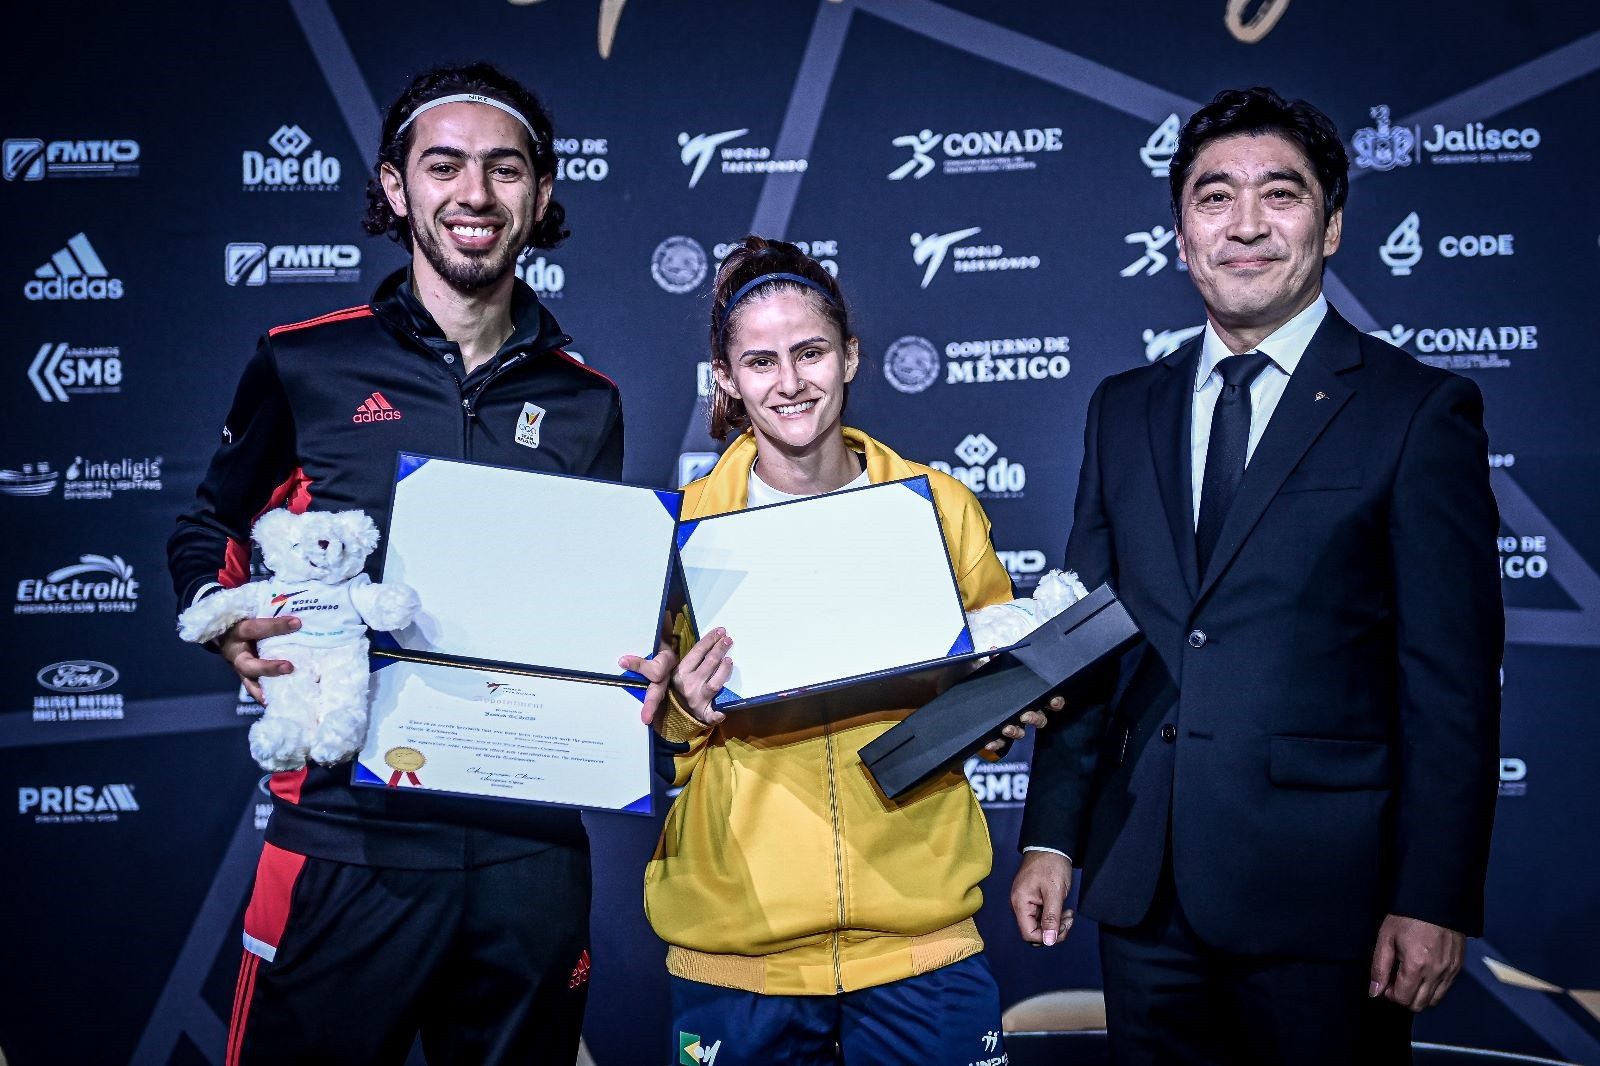 Belgium's Jaouad Achab and Brazil's Valeria Santos have been added to the World Taekwondo Athletes' Committee ©World Taekwondo